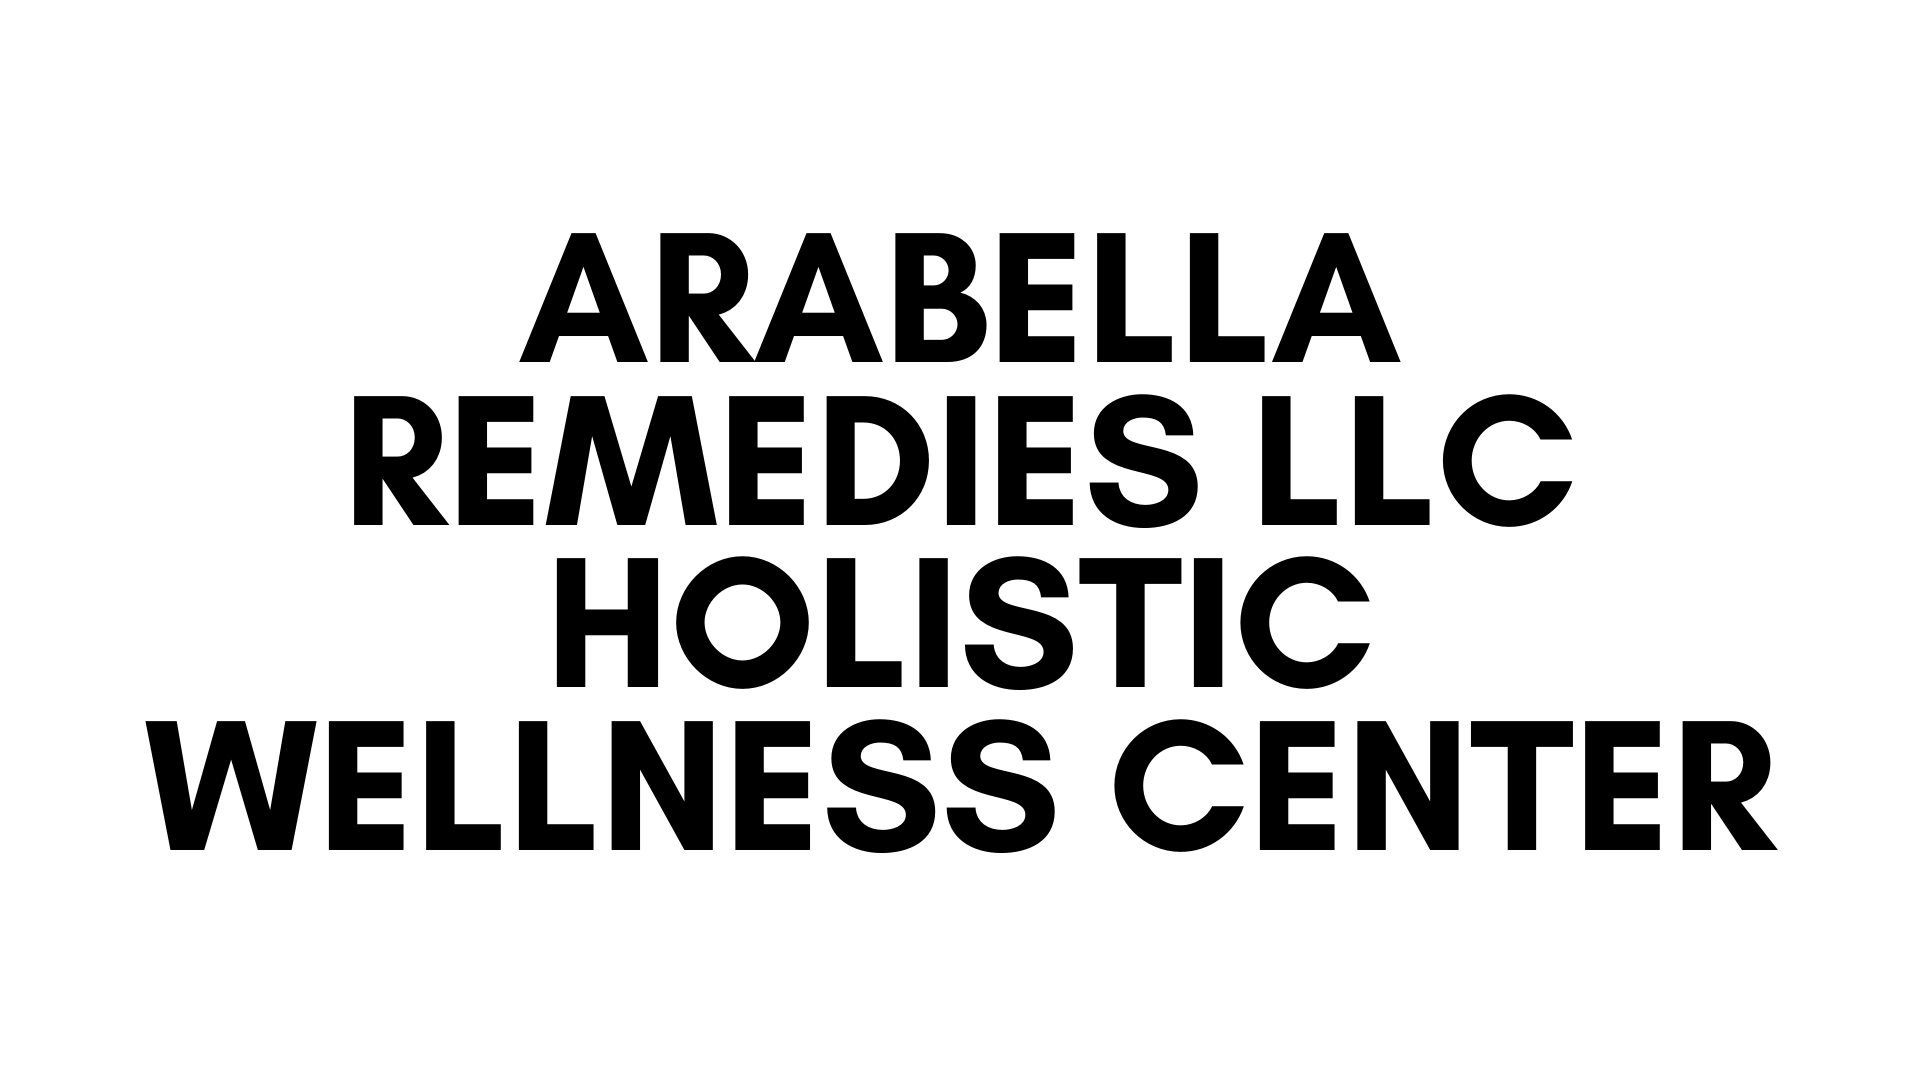 ARABELLA REMEDIES LLC HOLSITC WELLNESS CENTER